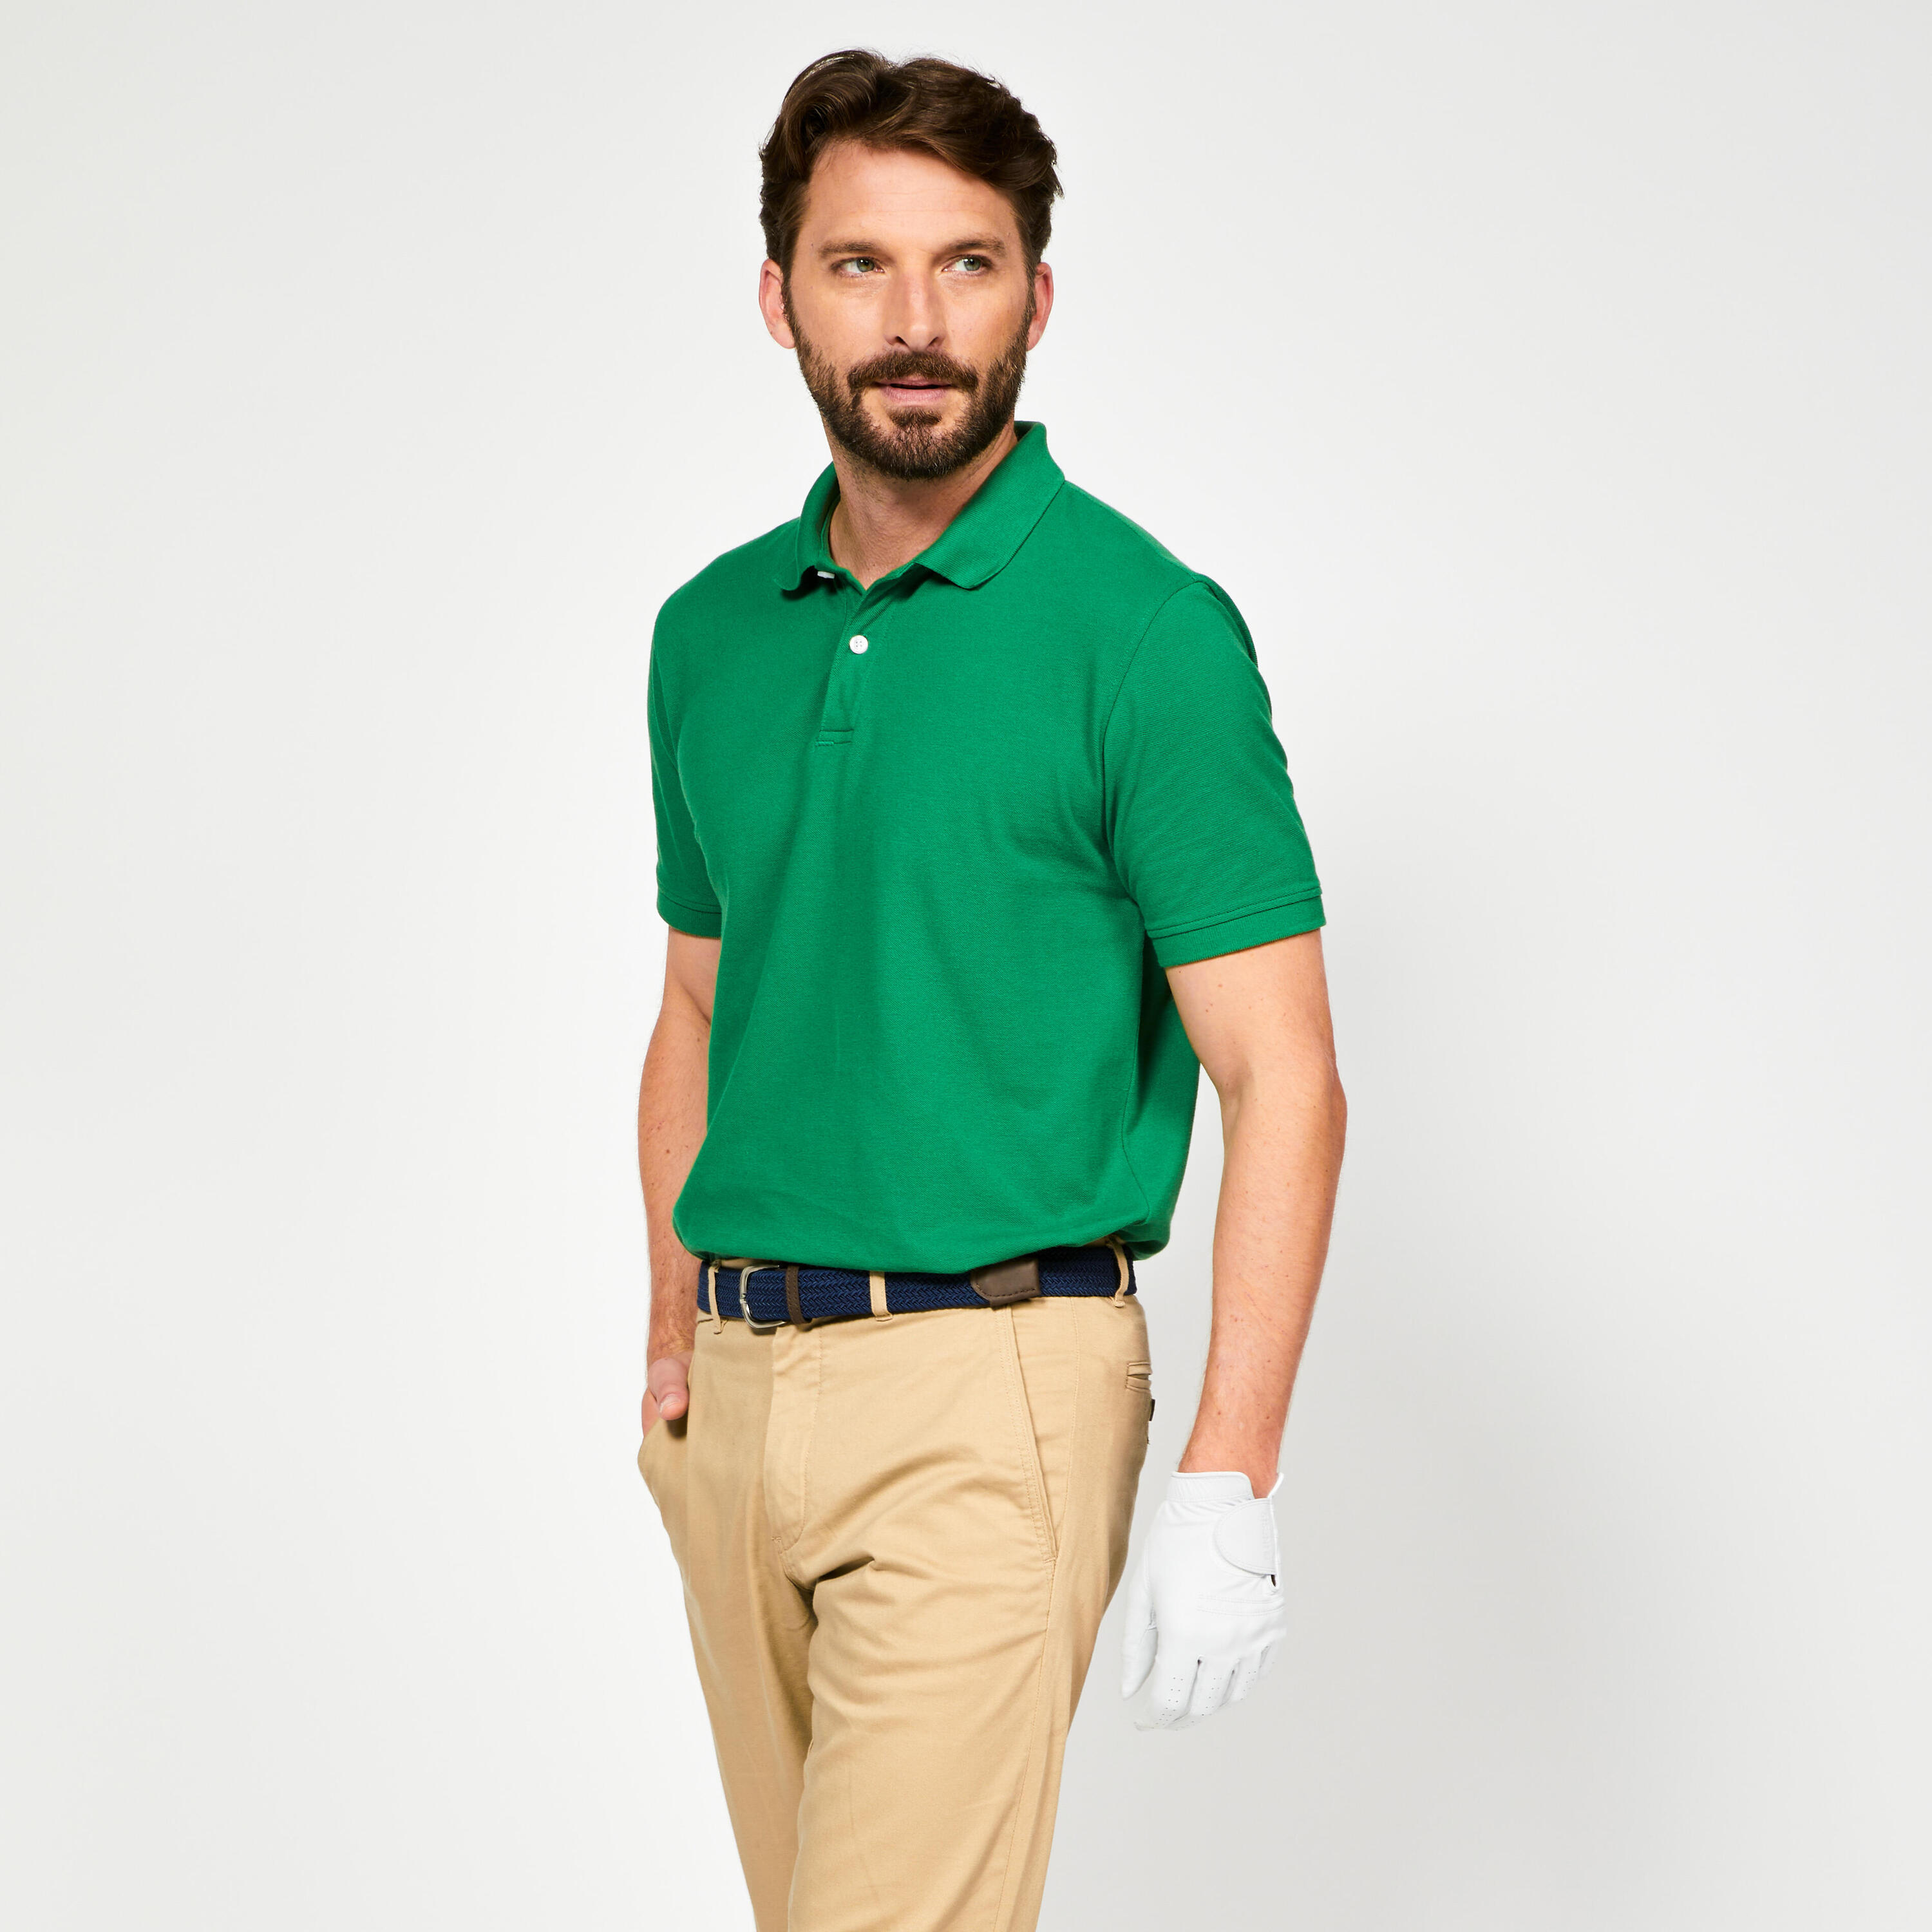 INESIS Men's short-sleeved golf polo shirt - MW500 forest green